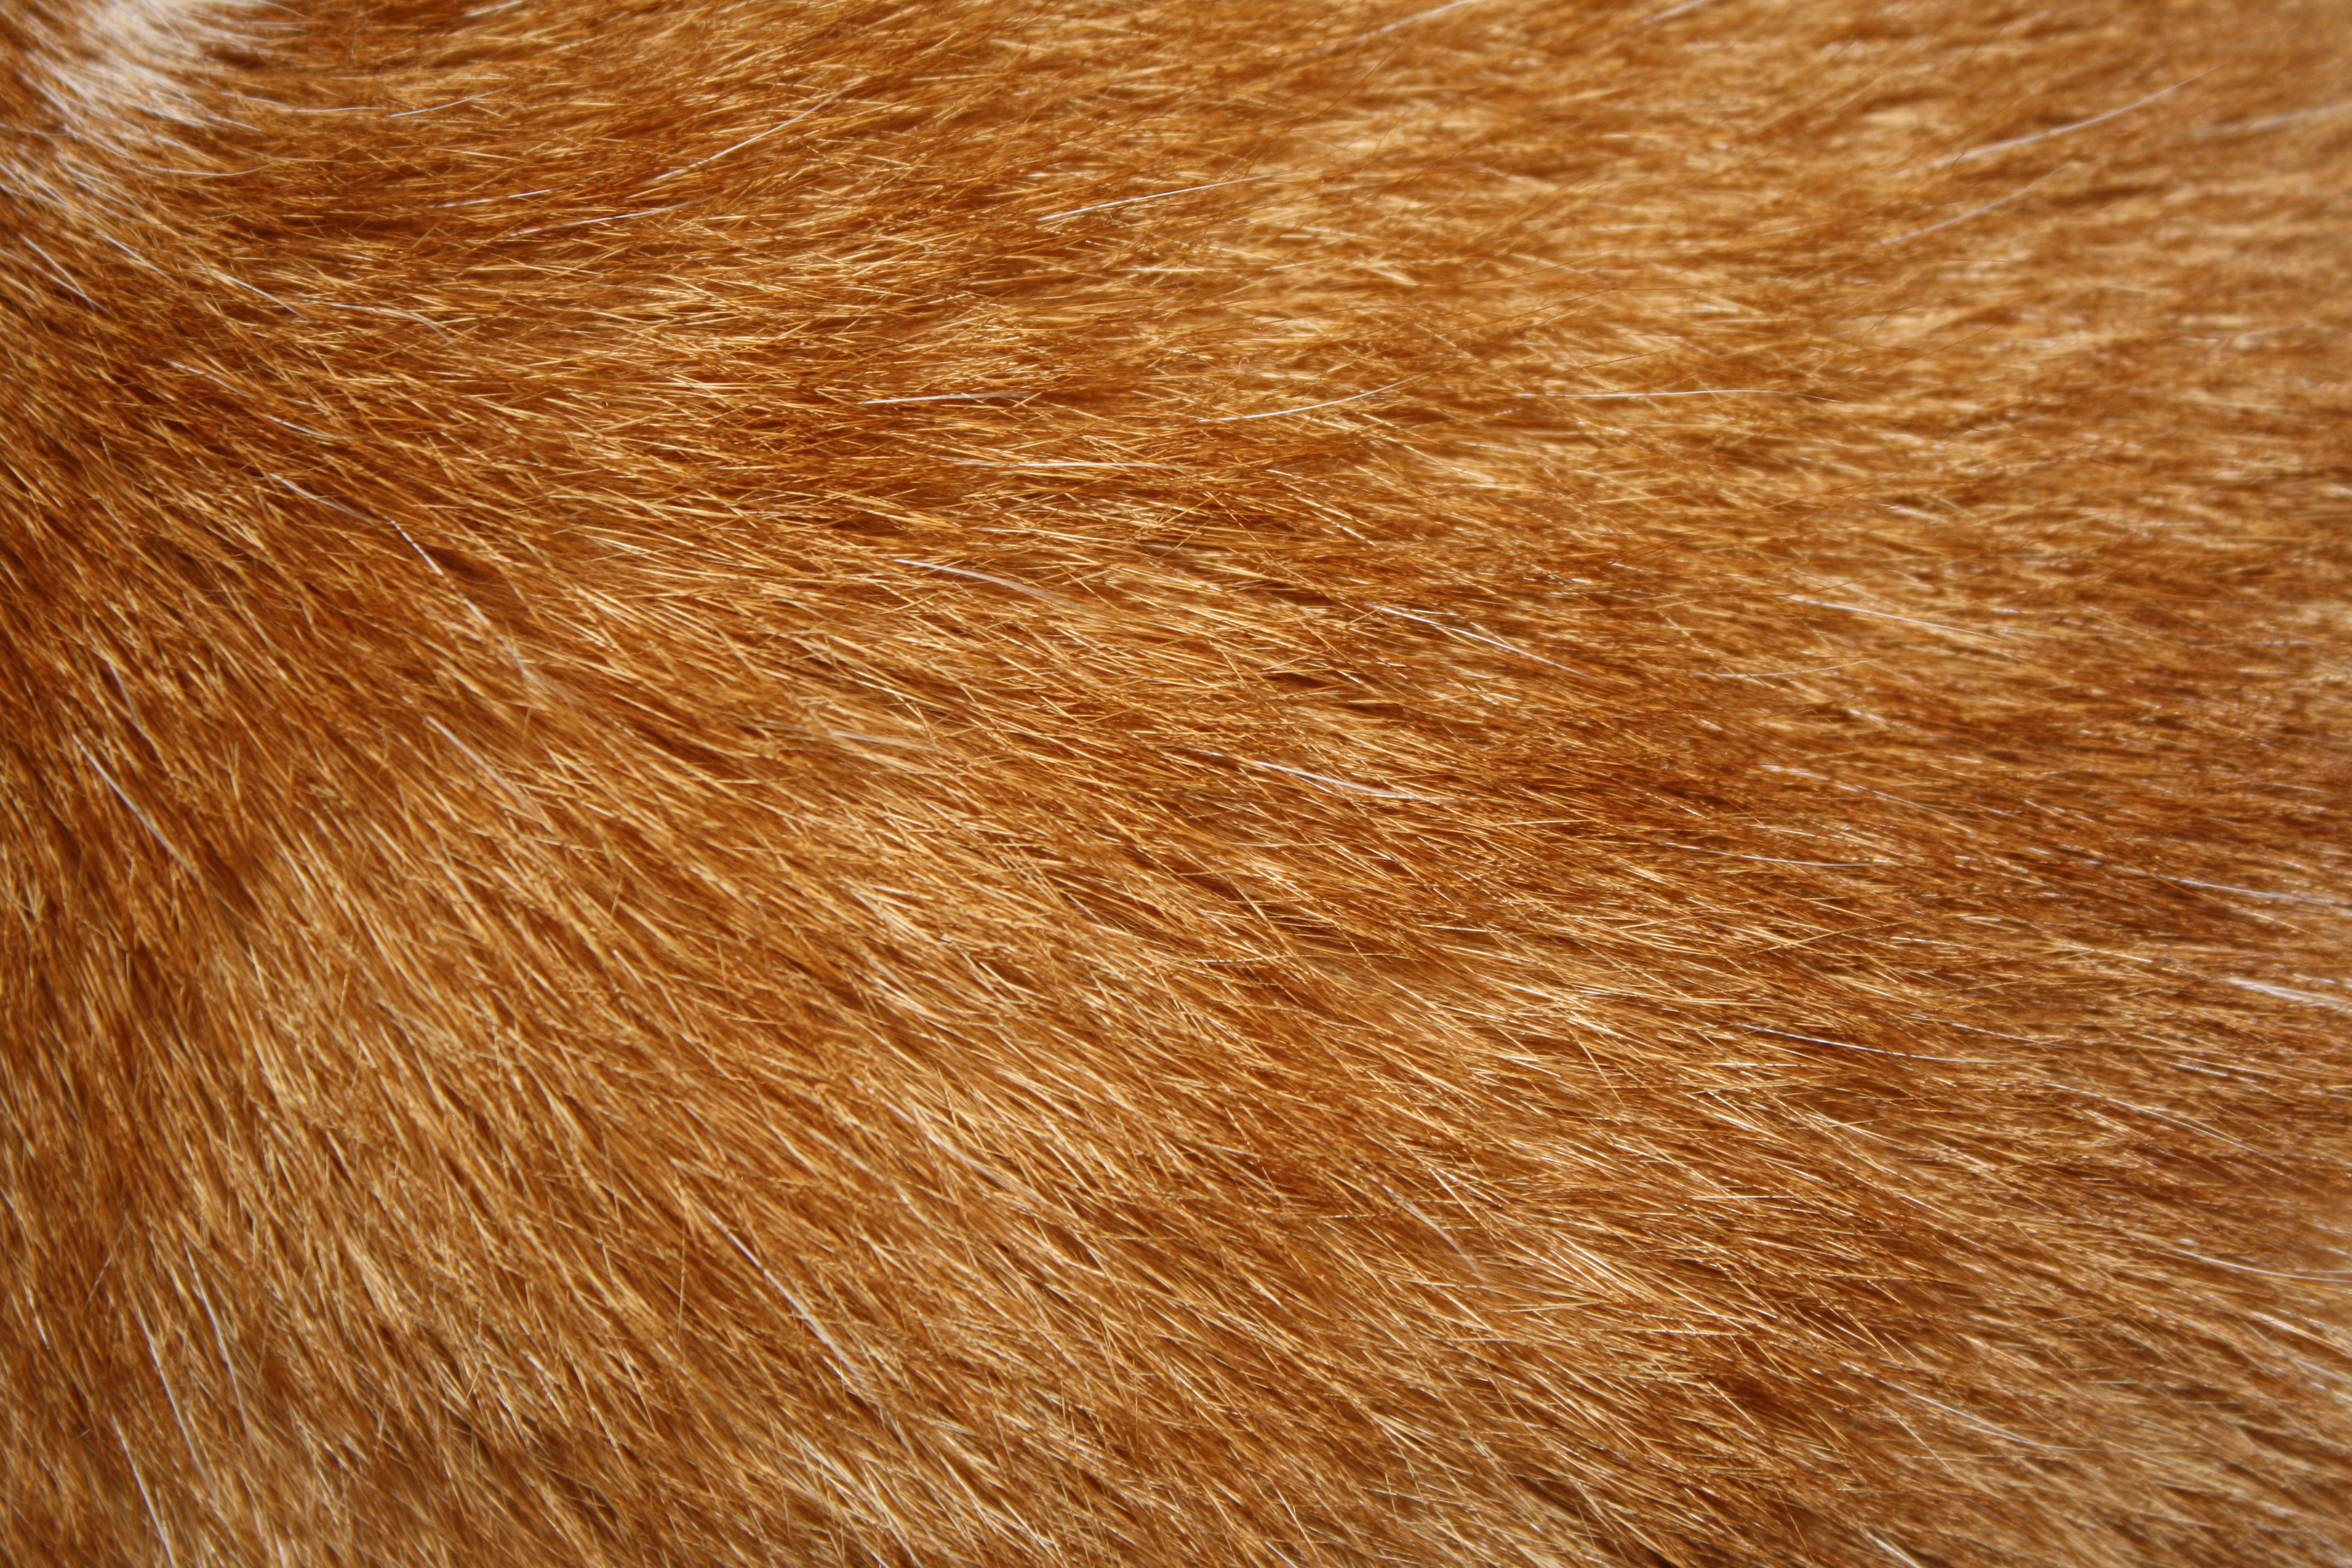  , texture fur, fur texture background, background